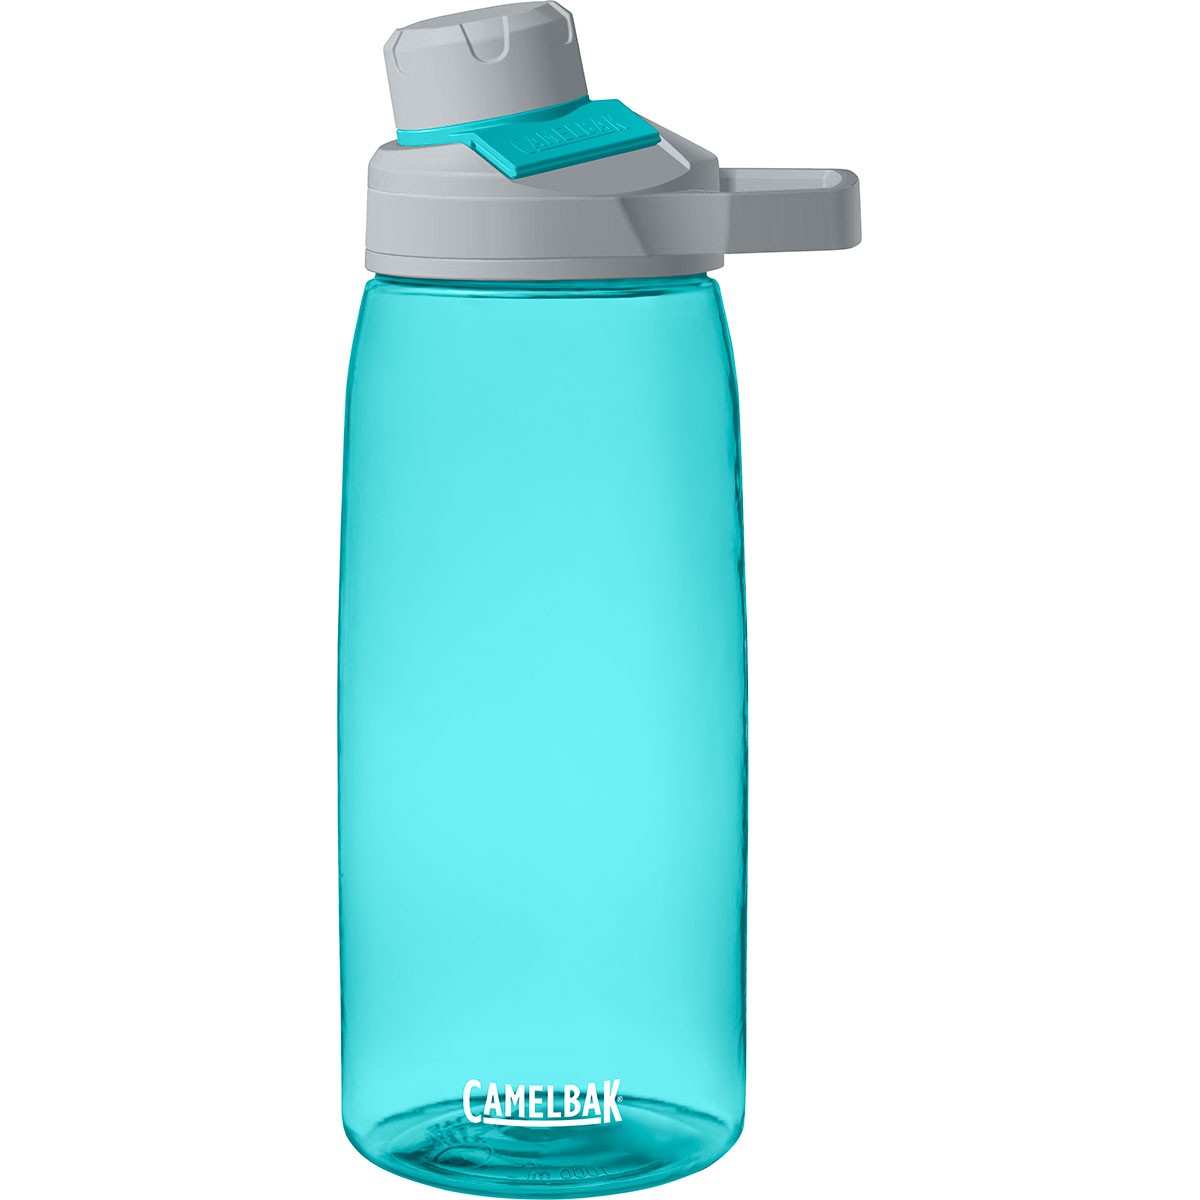 toezicht houden op Imitatie ingewikkeld Camelbak Chute lekvrije fles groot 1 liter of 1,5 liter - Waterflessenwinkel